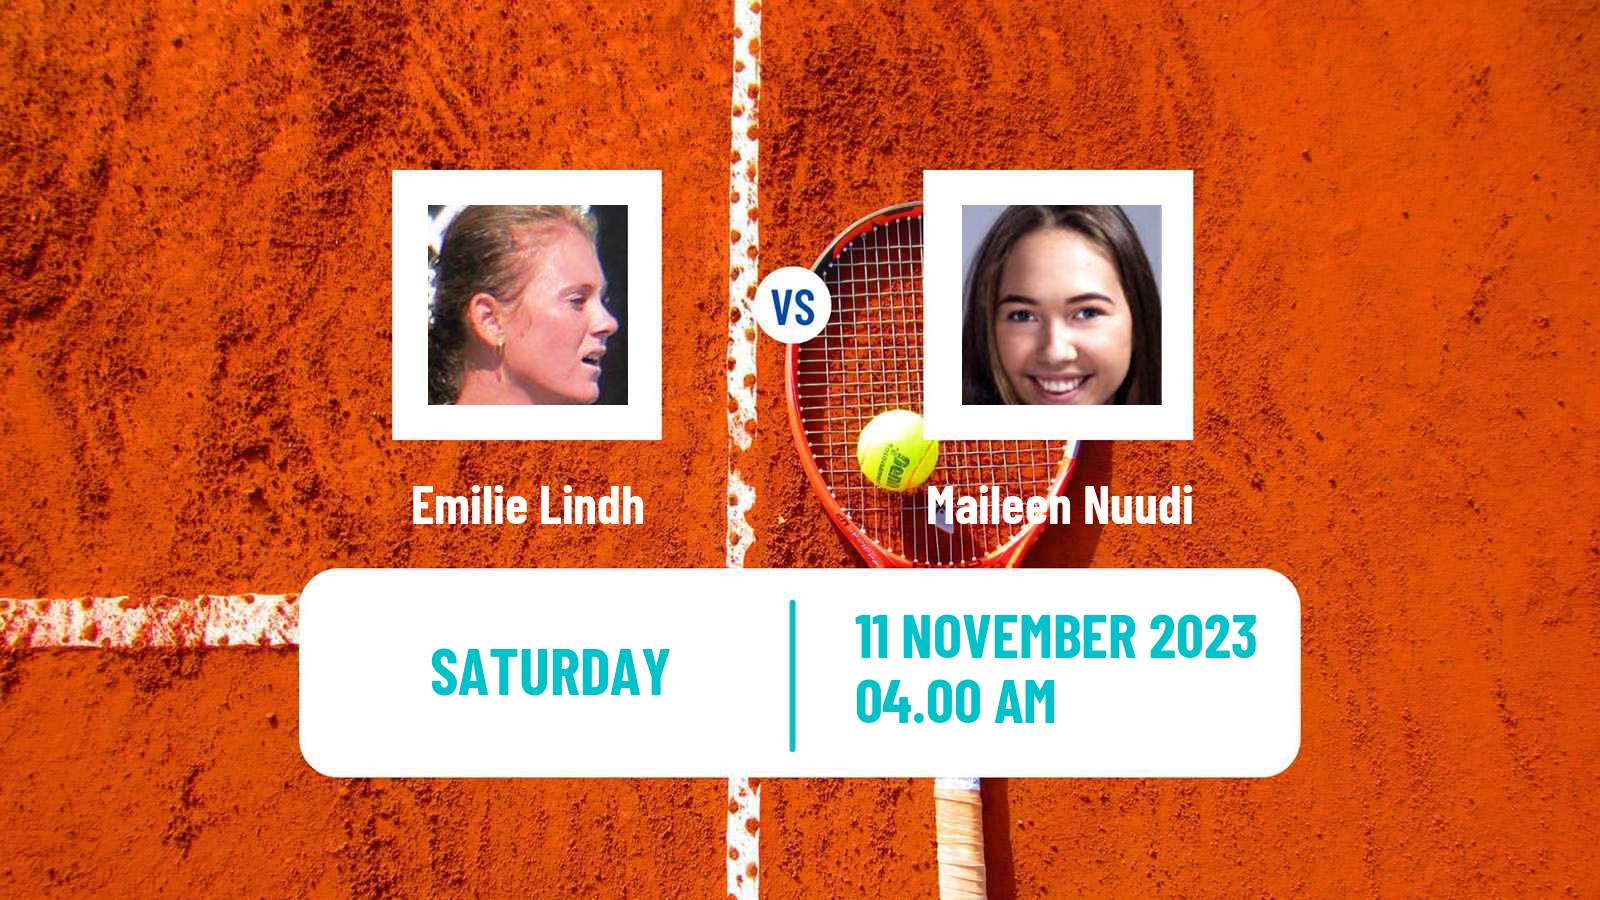 Tennis ITF W25 Solarino 2 Women Emilie Lindh - Maileen Nuudi